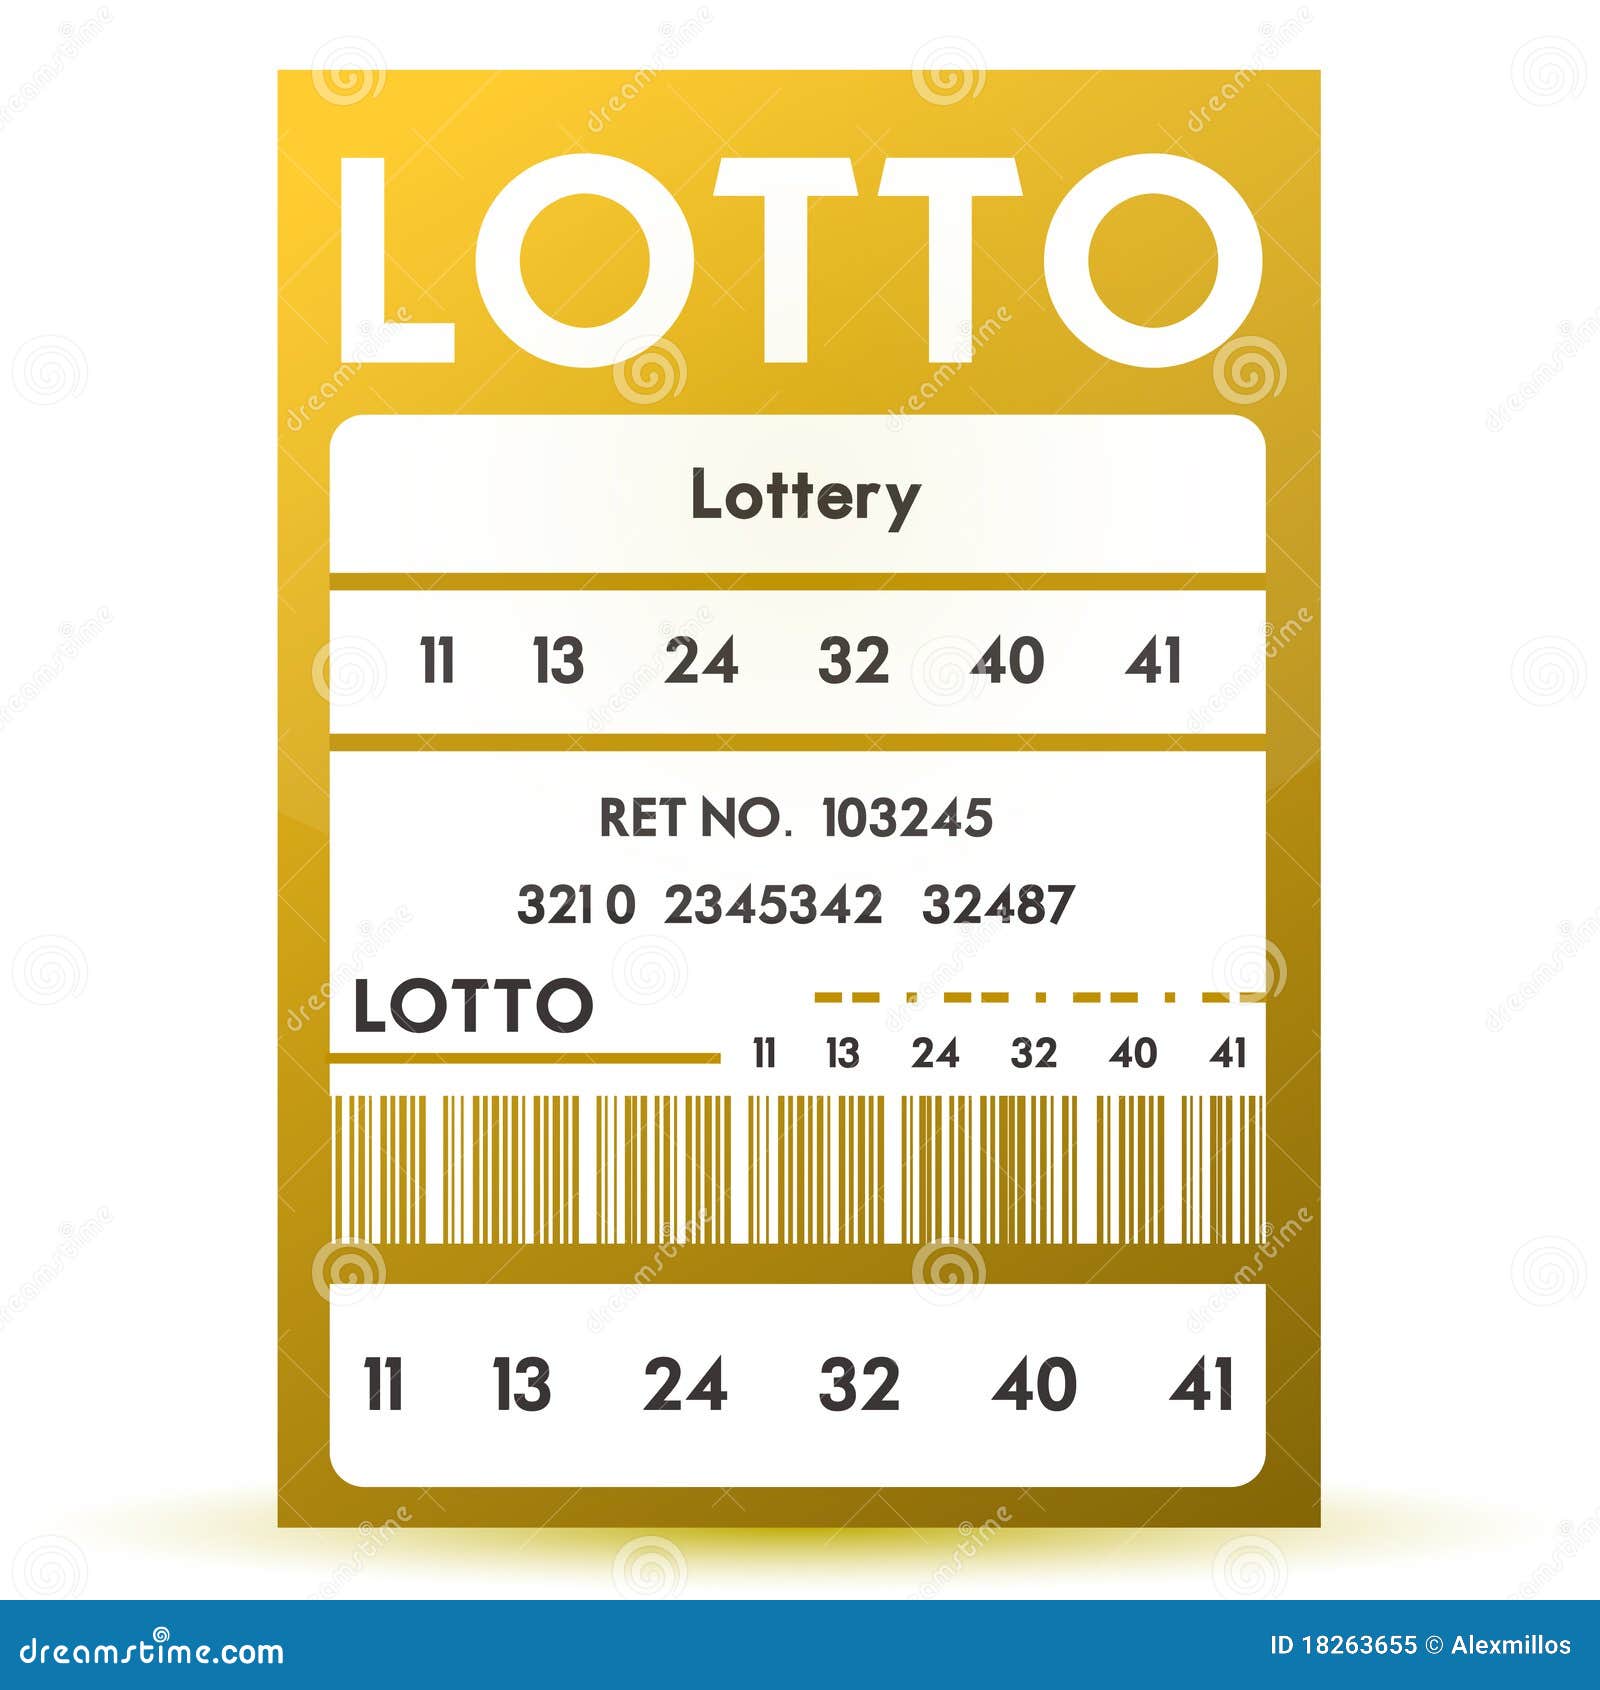 lottery ticket clip art